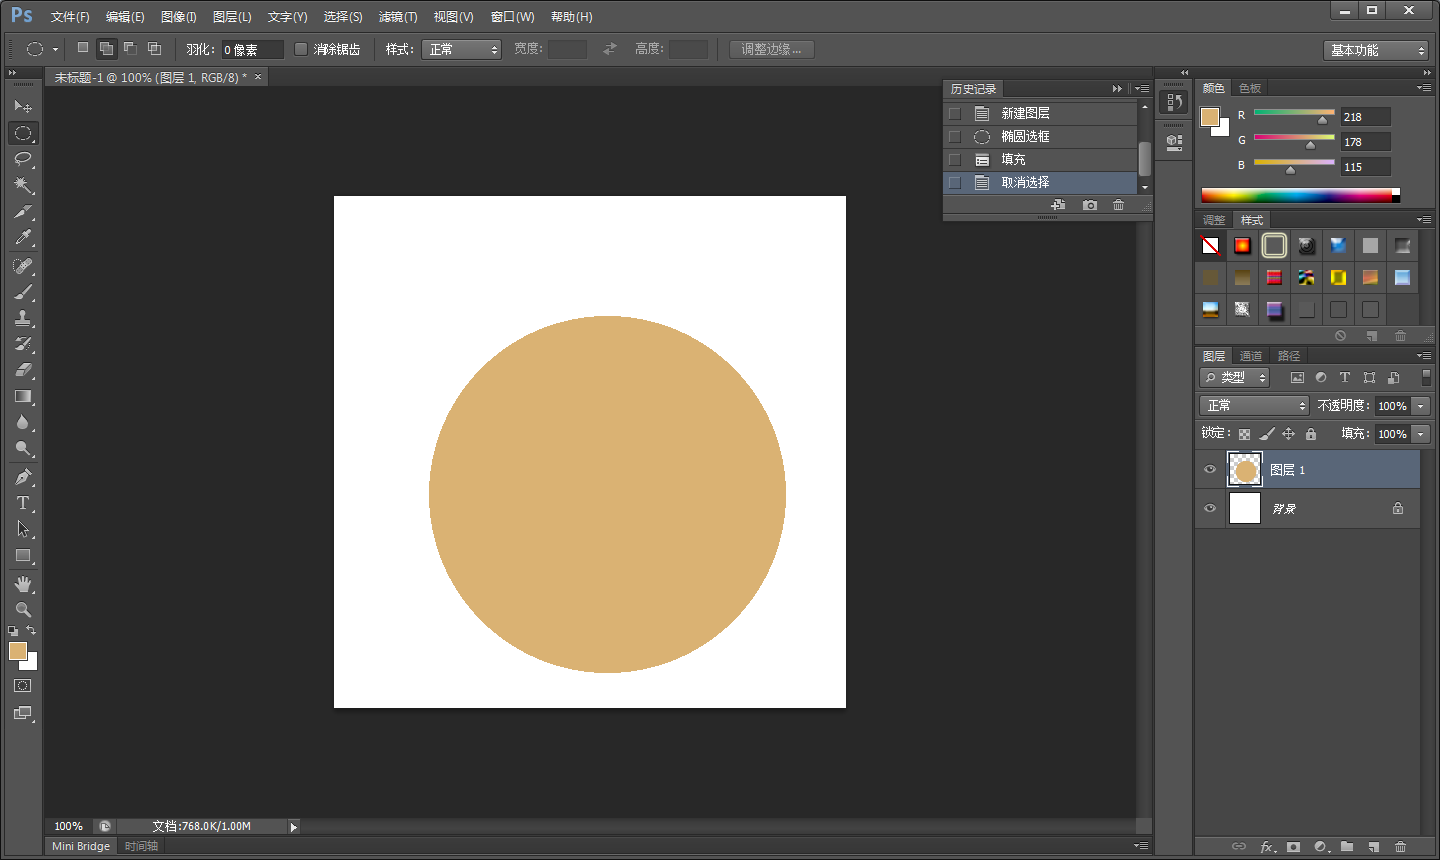 PS如何制作正圆形状-Adobe Photoshop制作正圆形状的方法教程 - 极光下载站